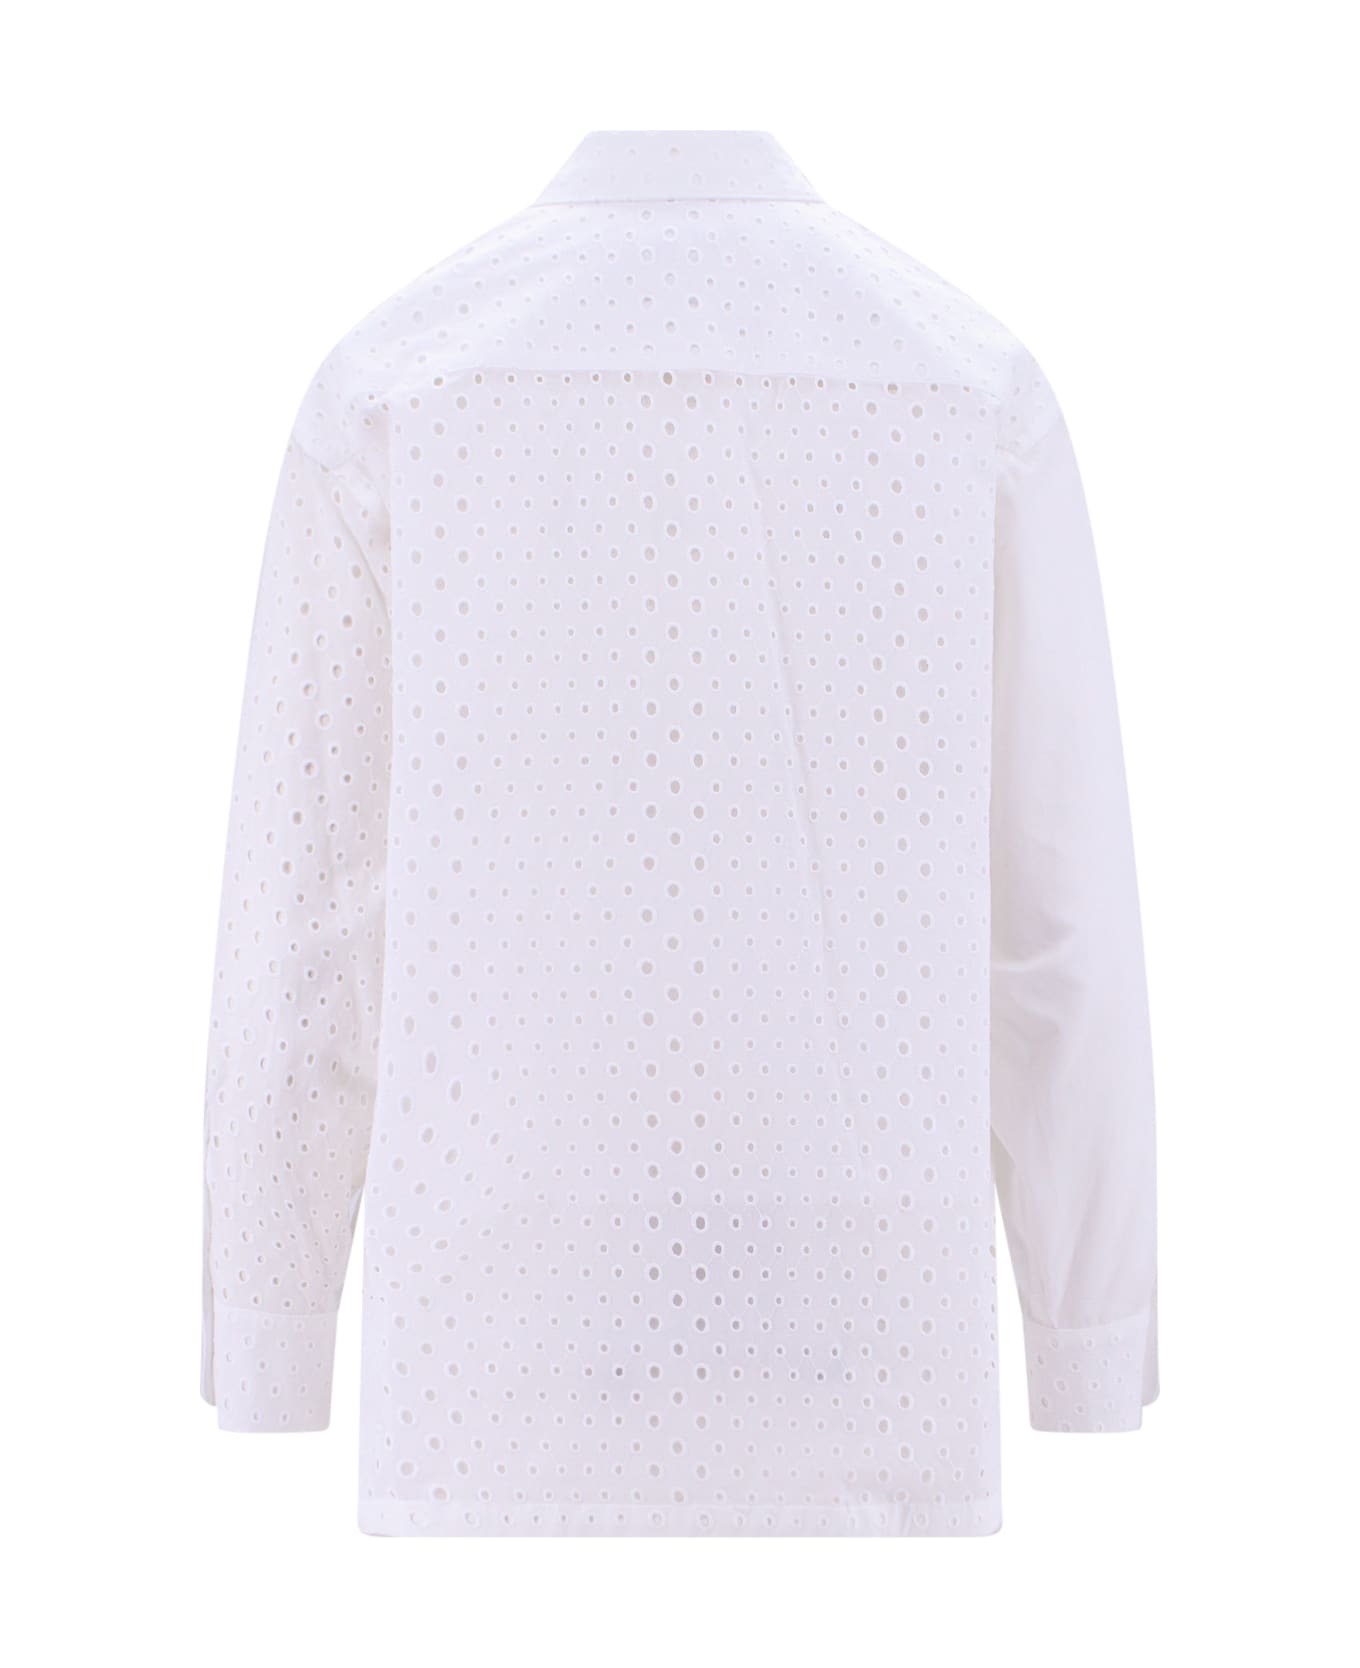 Kenzo Broderie Anglaise Cotton Shirt - White